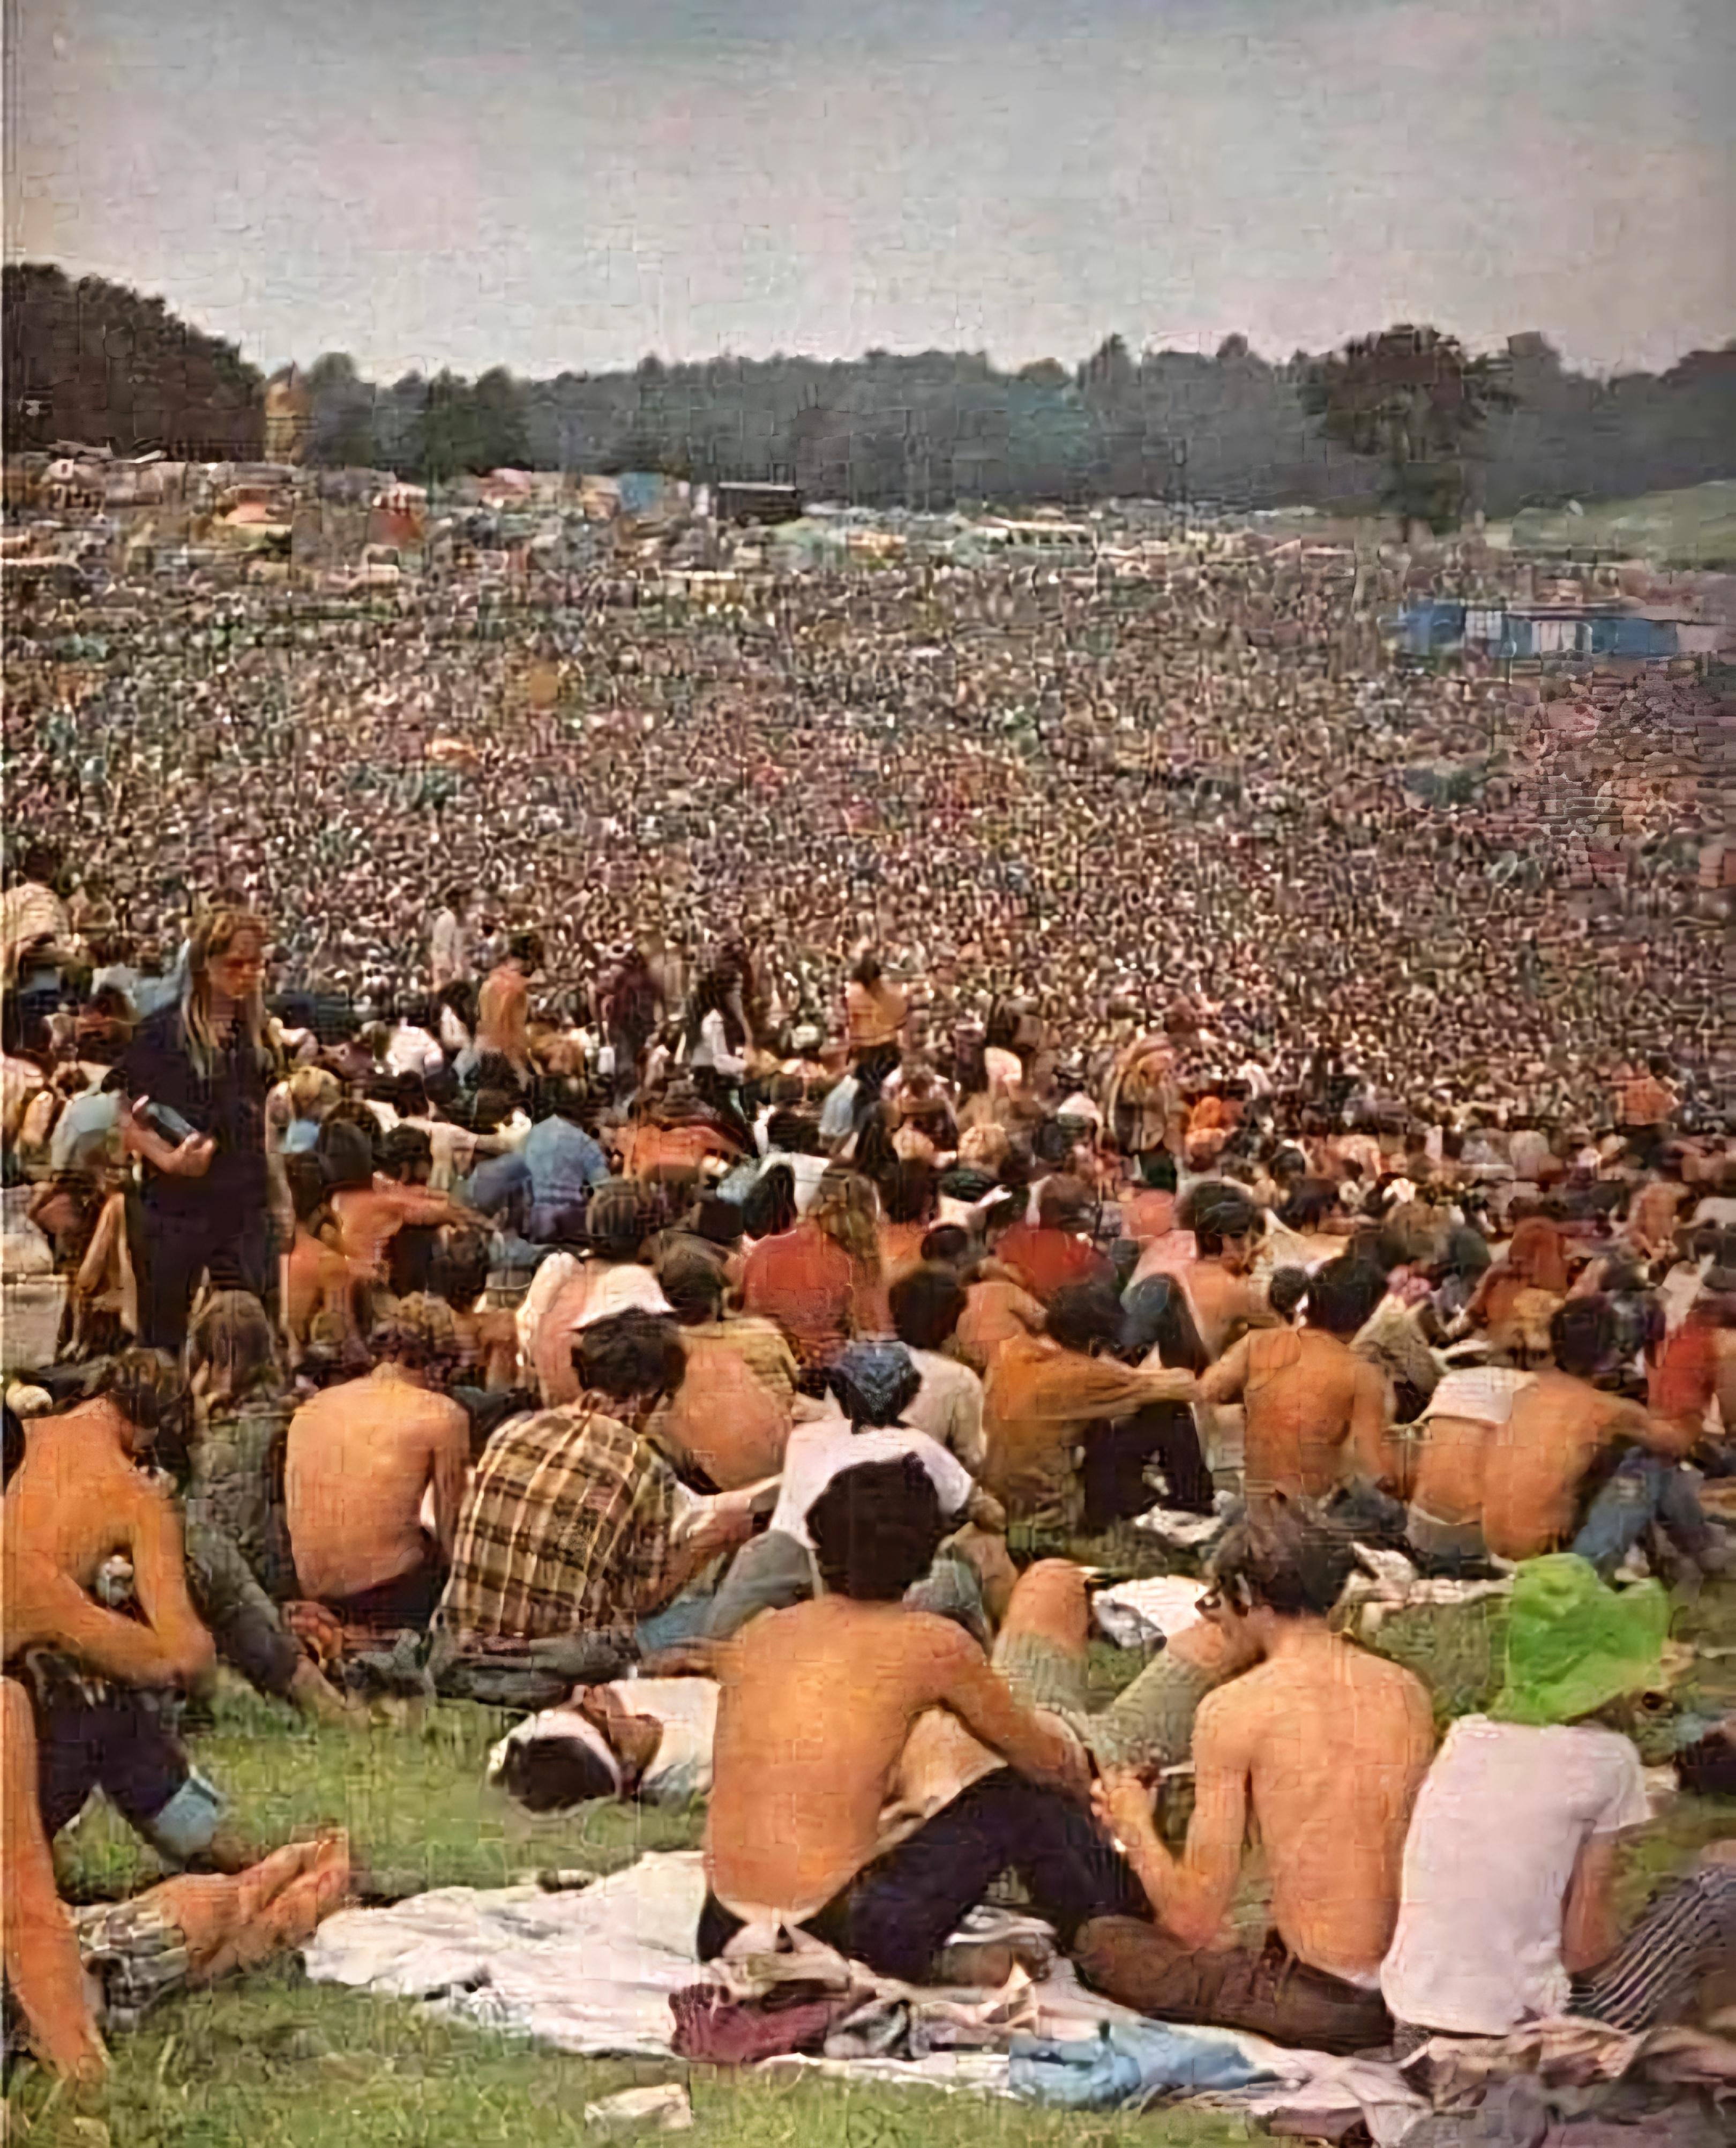 the-crowd-at-woodstock-1969-v0-sq04w3uaeasc1.jpeg